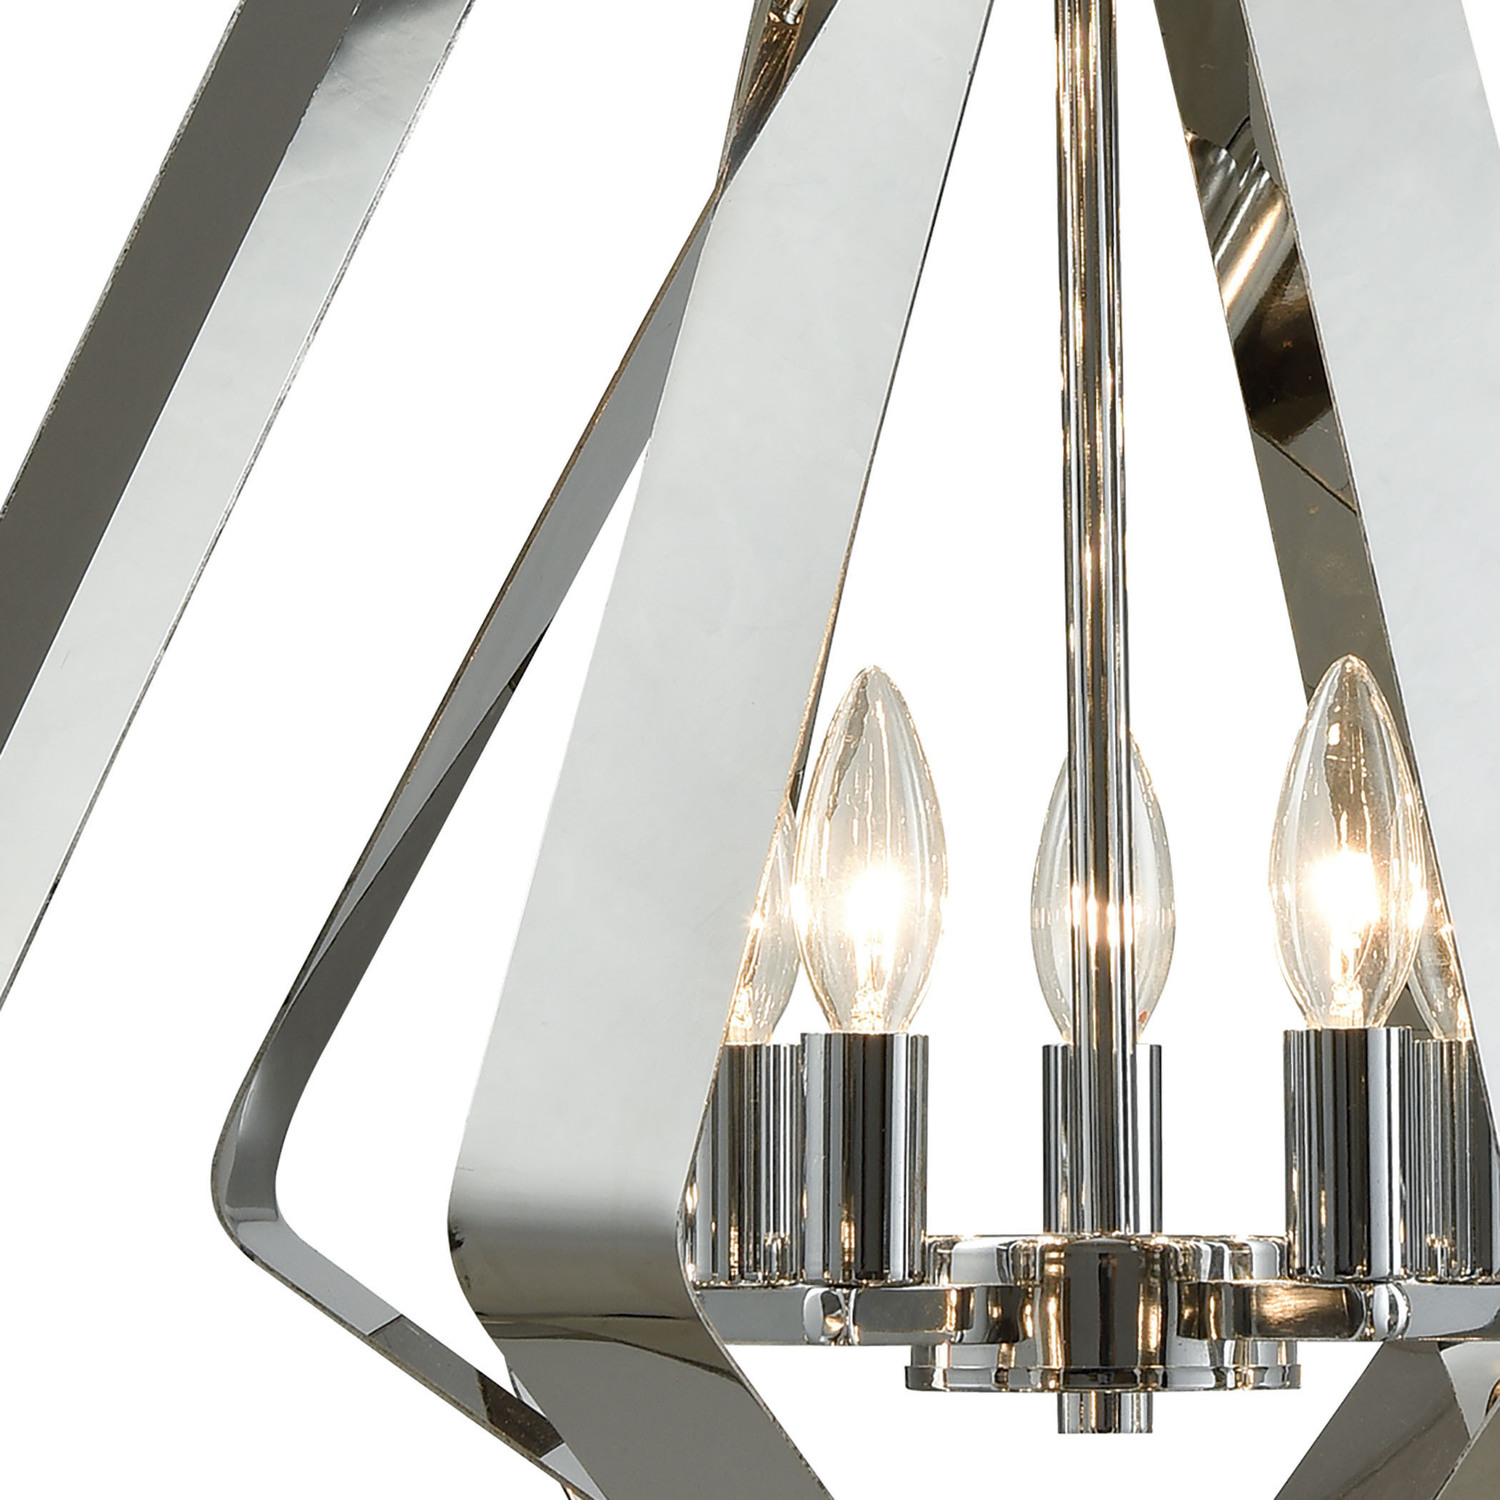 hooks for hanging lights from ceiling ELK Lighting Pendant Polished Chrome Modern / Contemporary